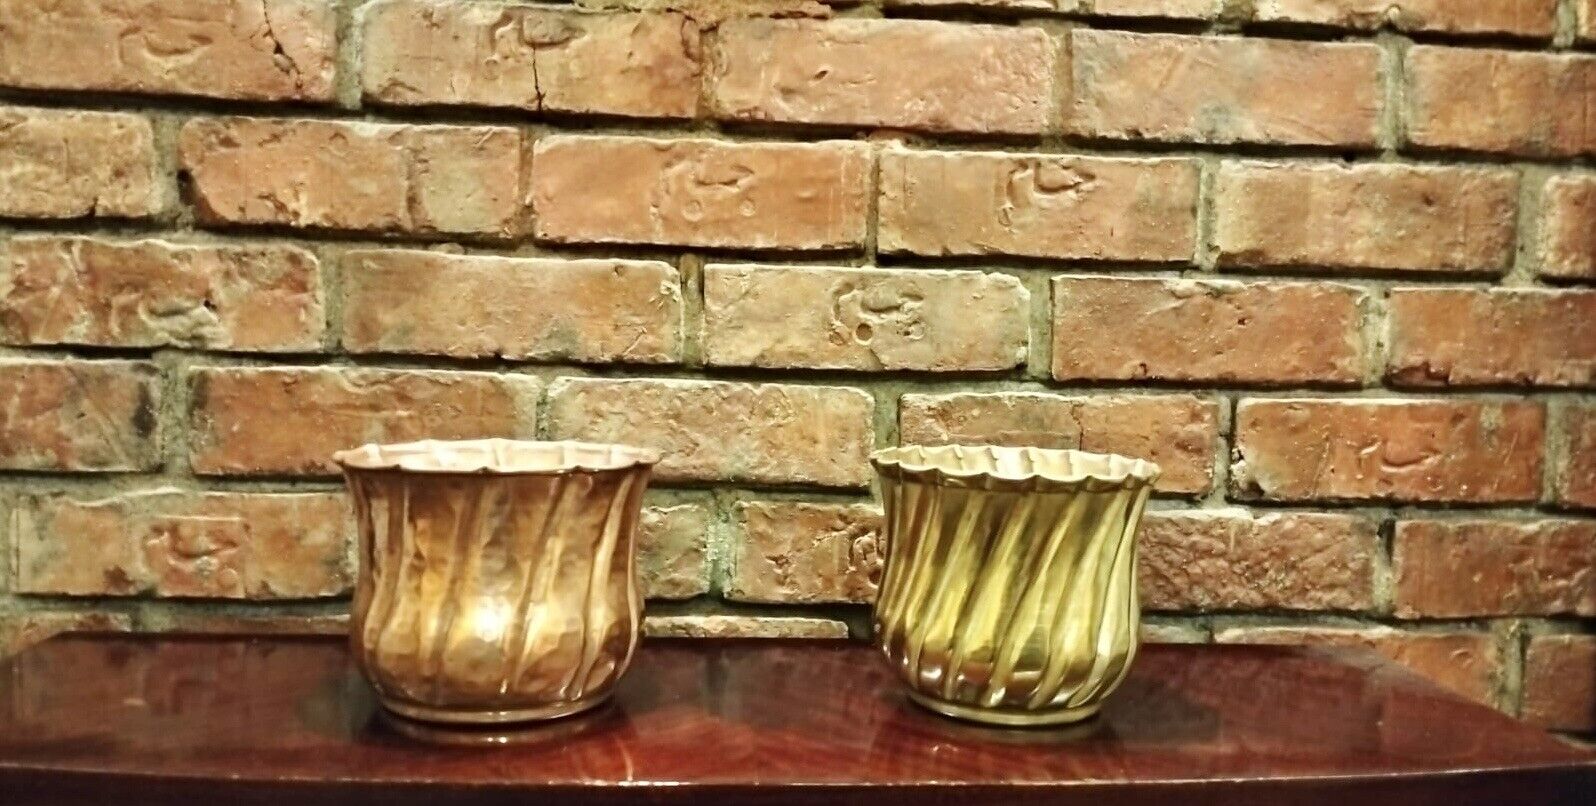 2 Vintage Brass Bowl For Flowers